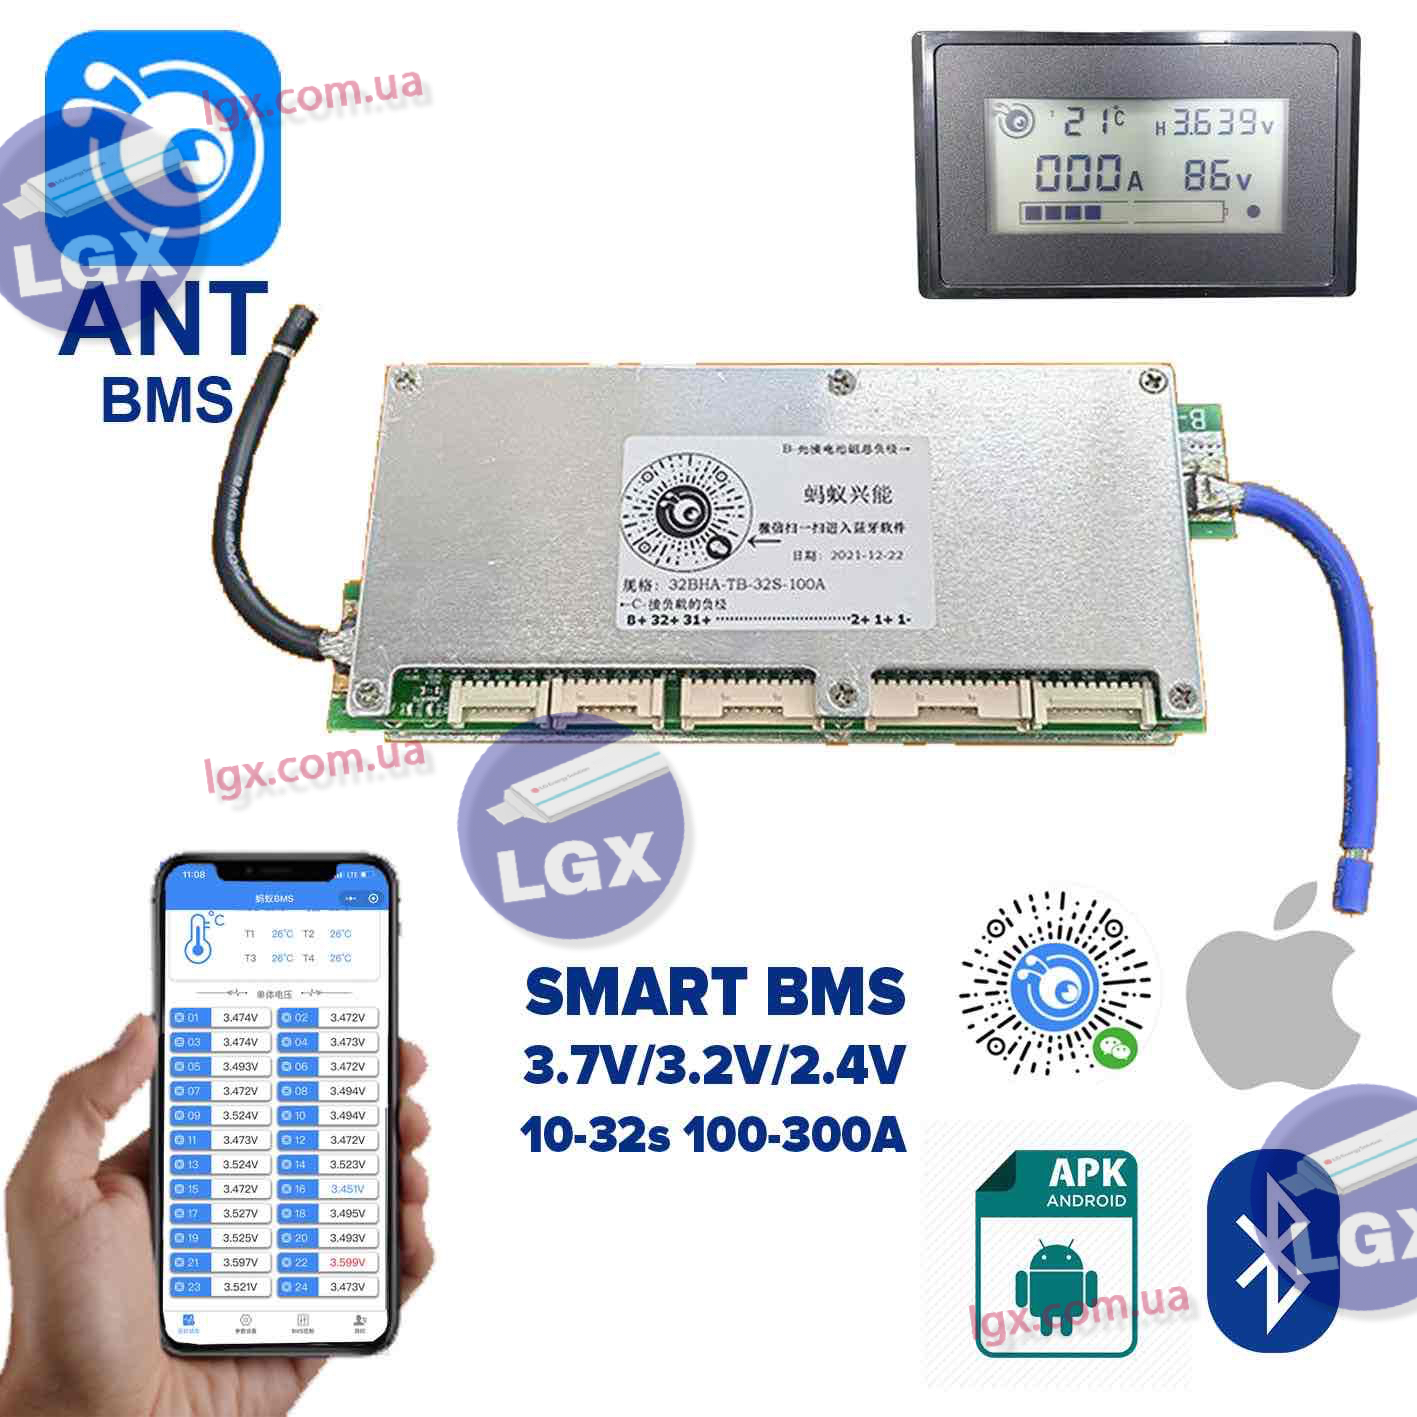 Smart SMART BMS ANT 10-32s 100-300A Симетричная  Активный Баласир 200mAh Li-ion, LiPo, LifePO4, LTO, NMC, LiHV Вес 700-700g Bluetooth Android IOS PC APP APK